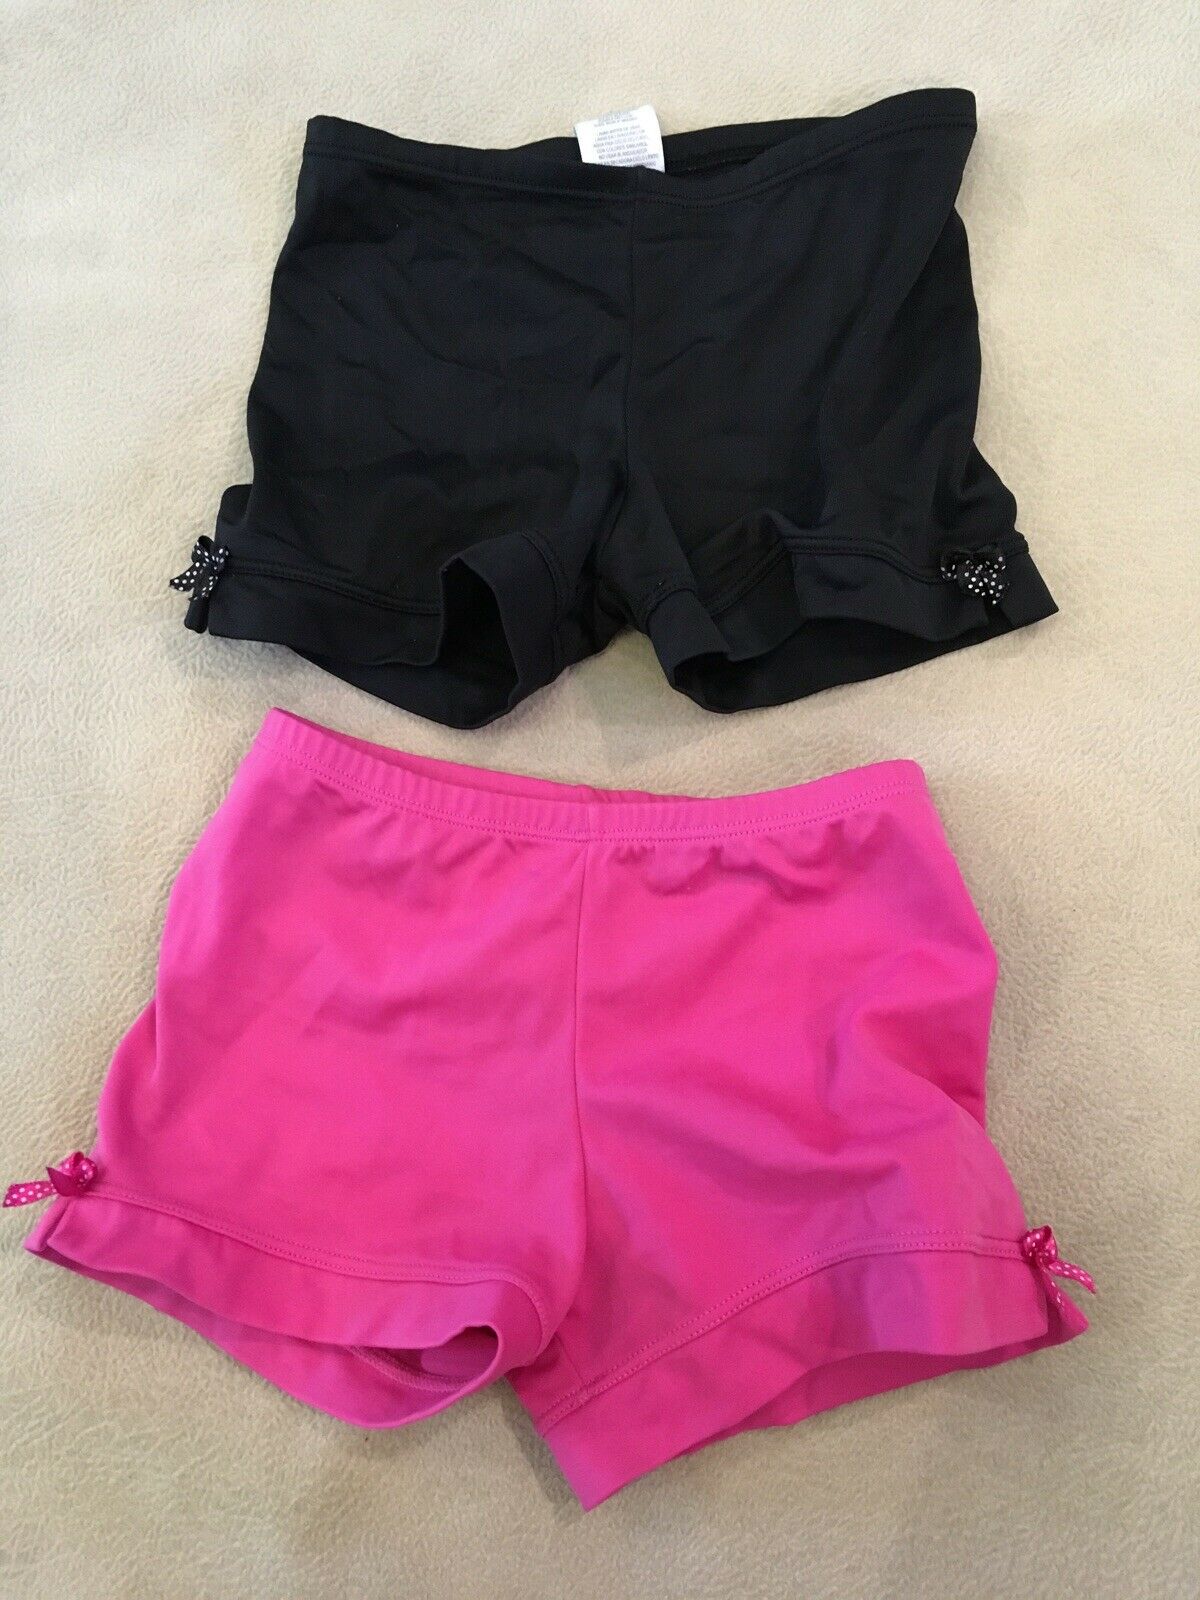 Dance Shorts Lot Xs Girls Black Pink 4/5 Nylon Spandex